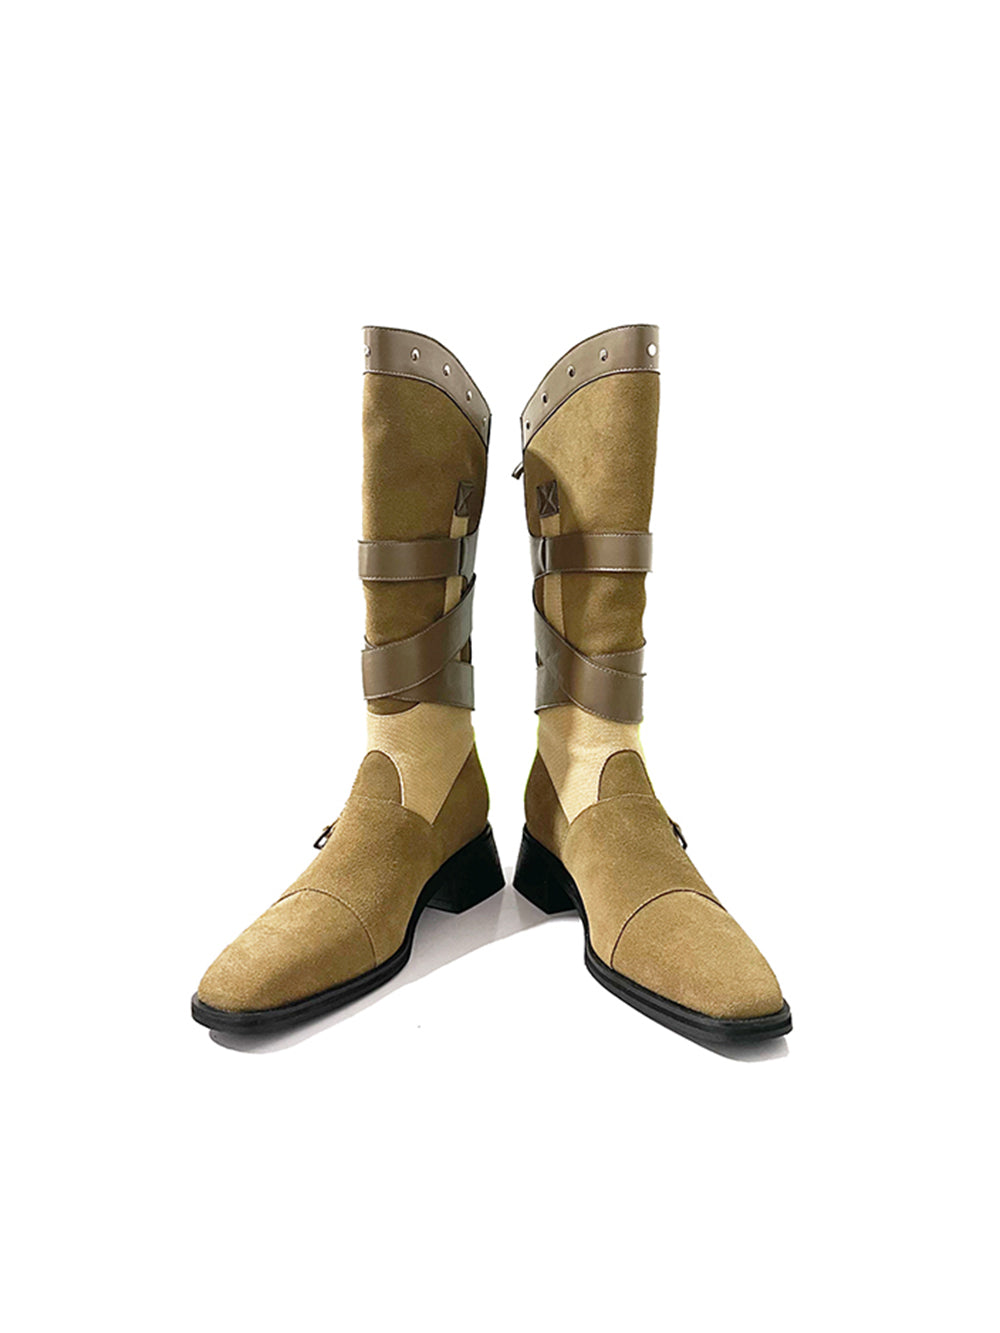 MUKTANK×AZ43 Low-heeled Khaki Comfortable All-match Boots